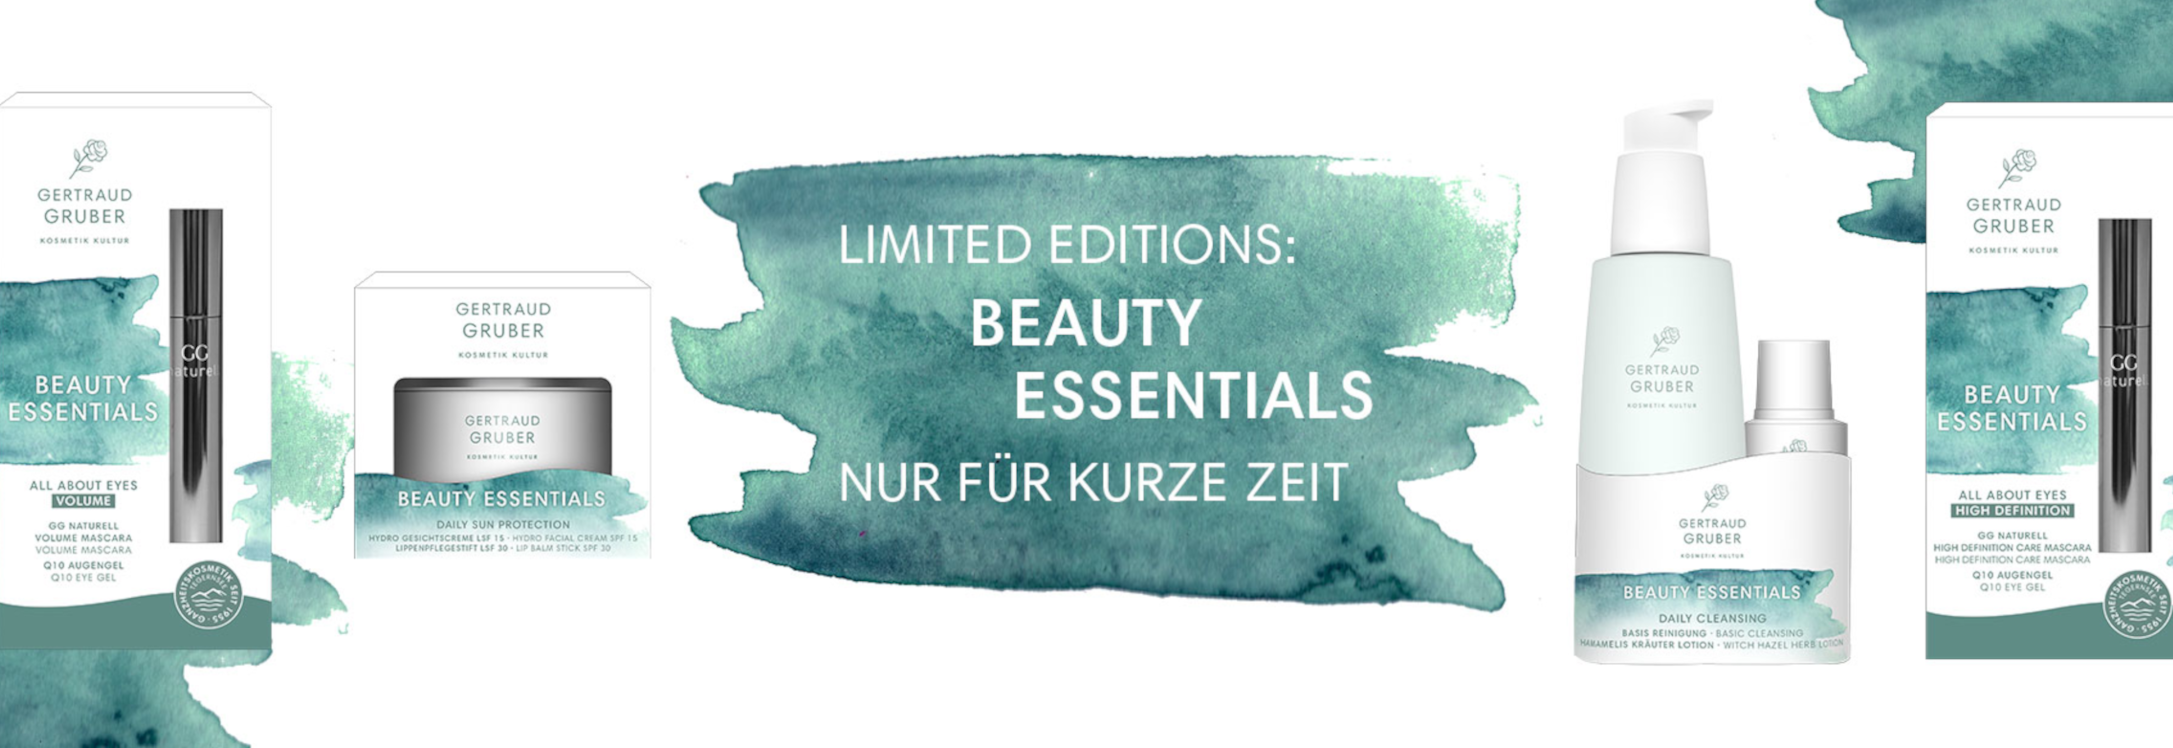 Gertraud Gruber Beauty Essentials